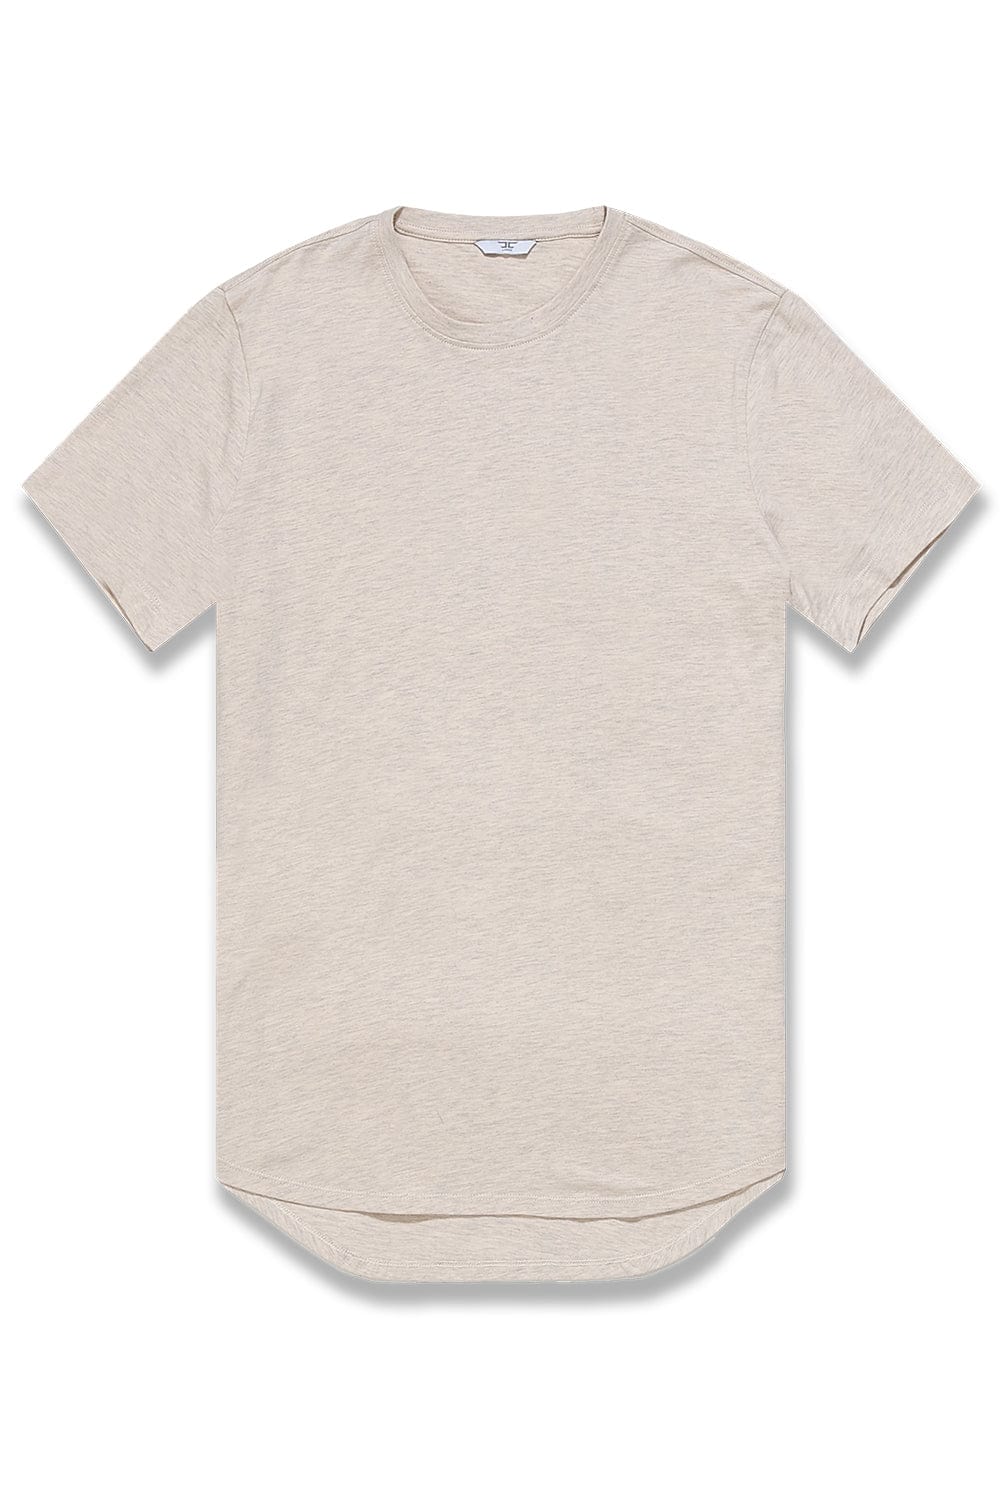 JC Big Men Big Men's Scallop T-Shirt (Name Your Price) Gunpowder / 4XL